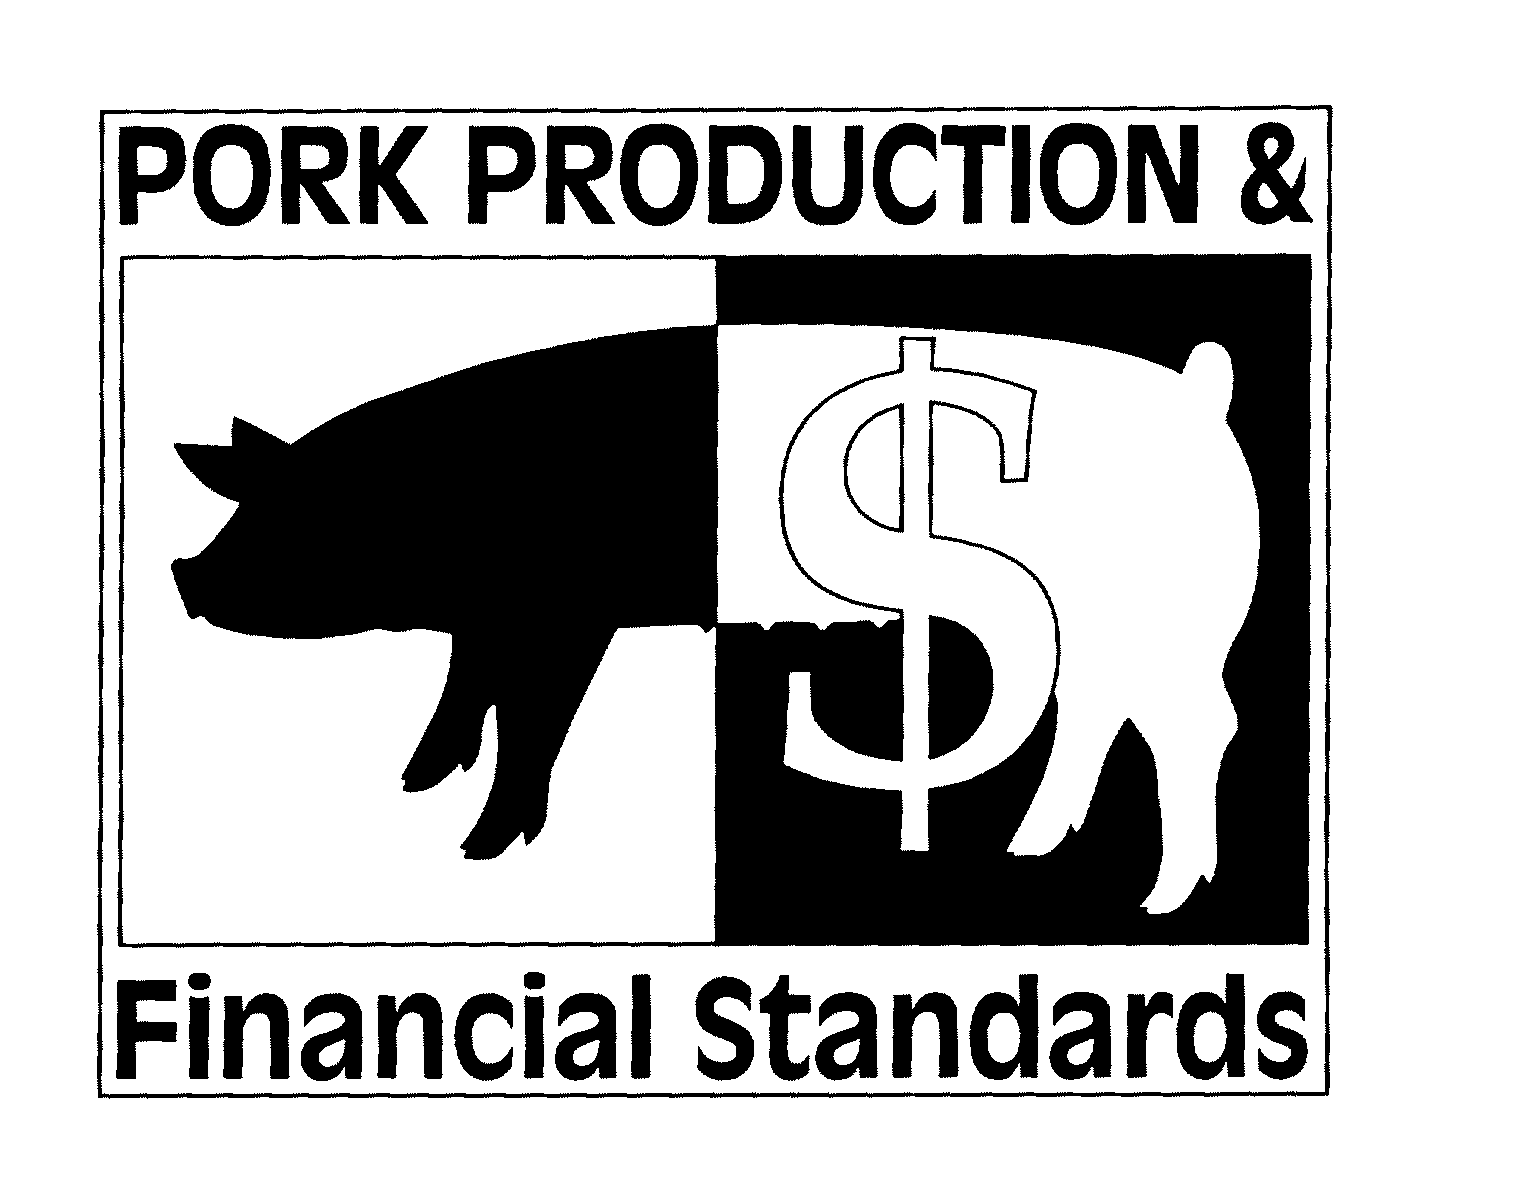  PORK PRODUCTION &amp; FINANCIAL STANDARDS $